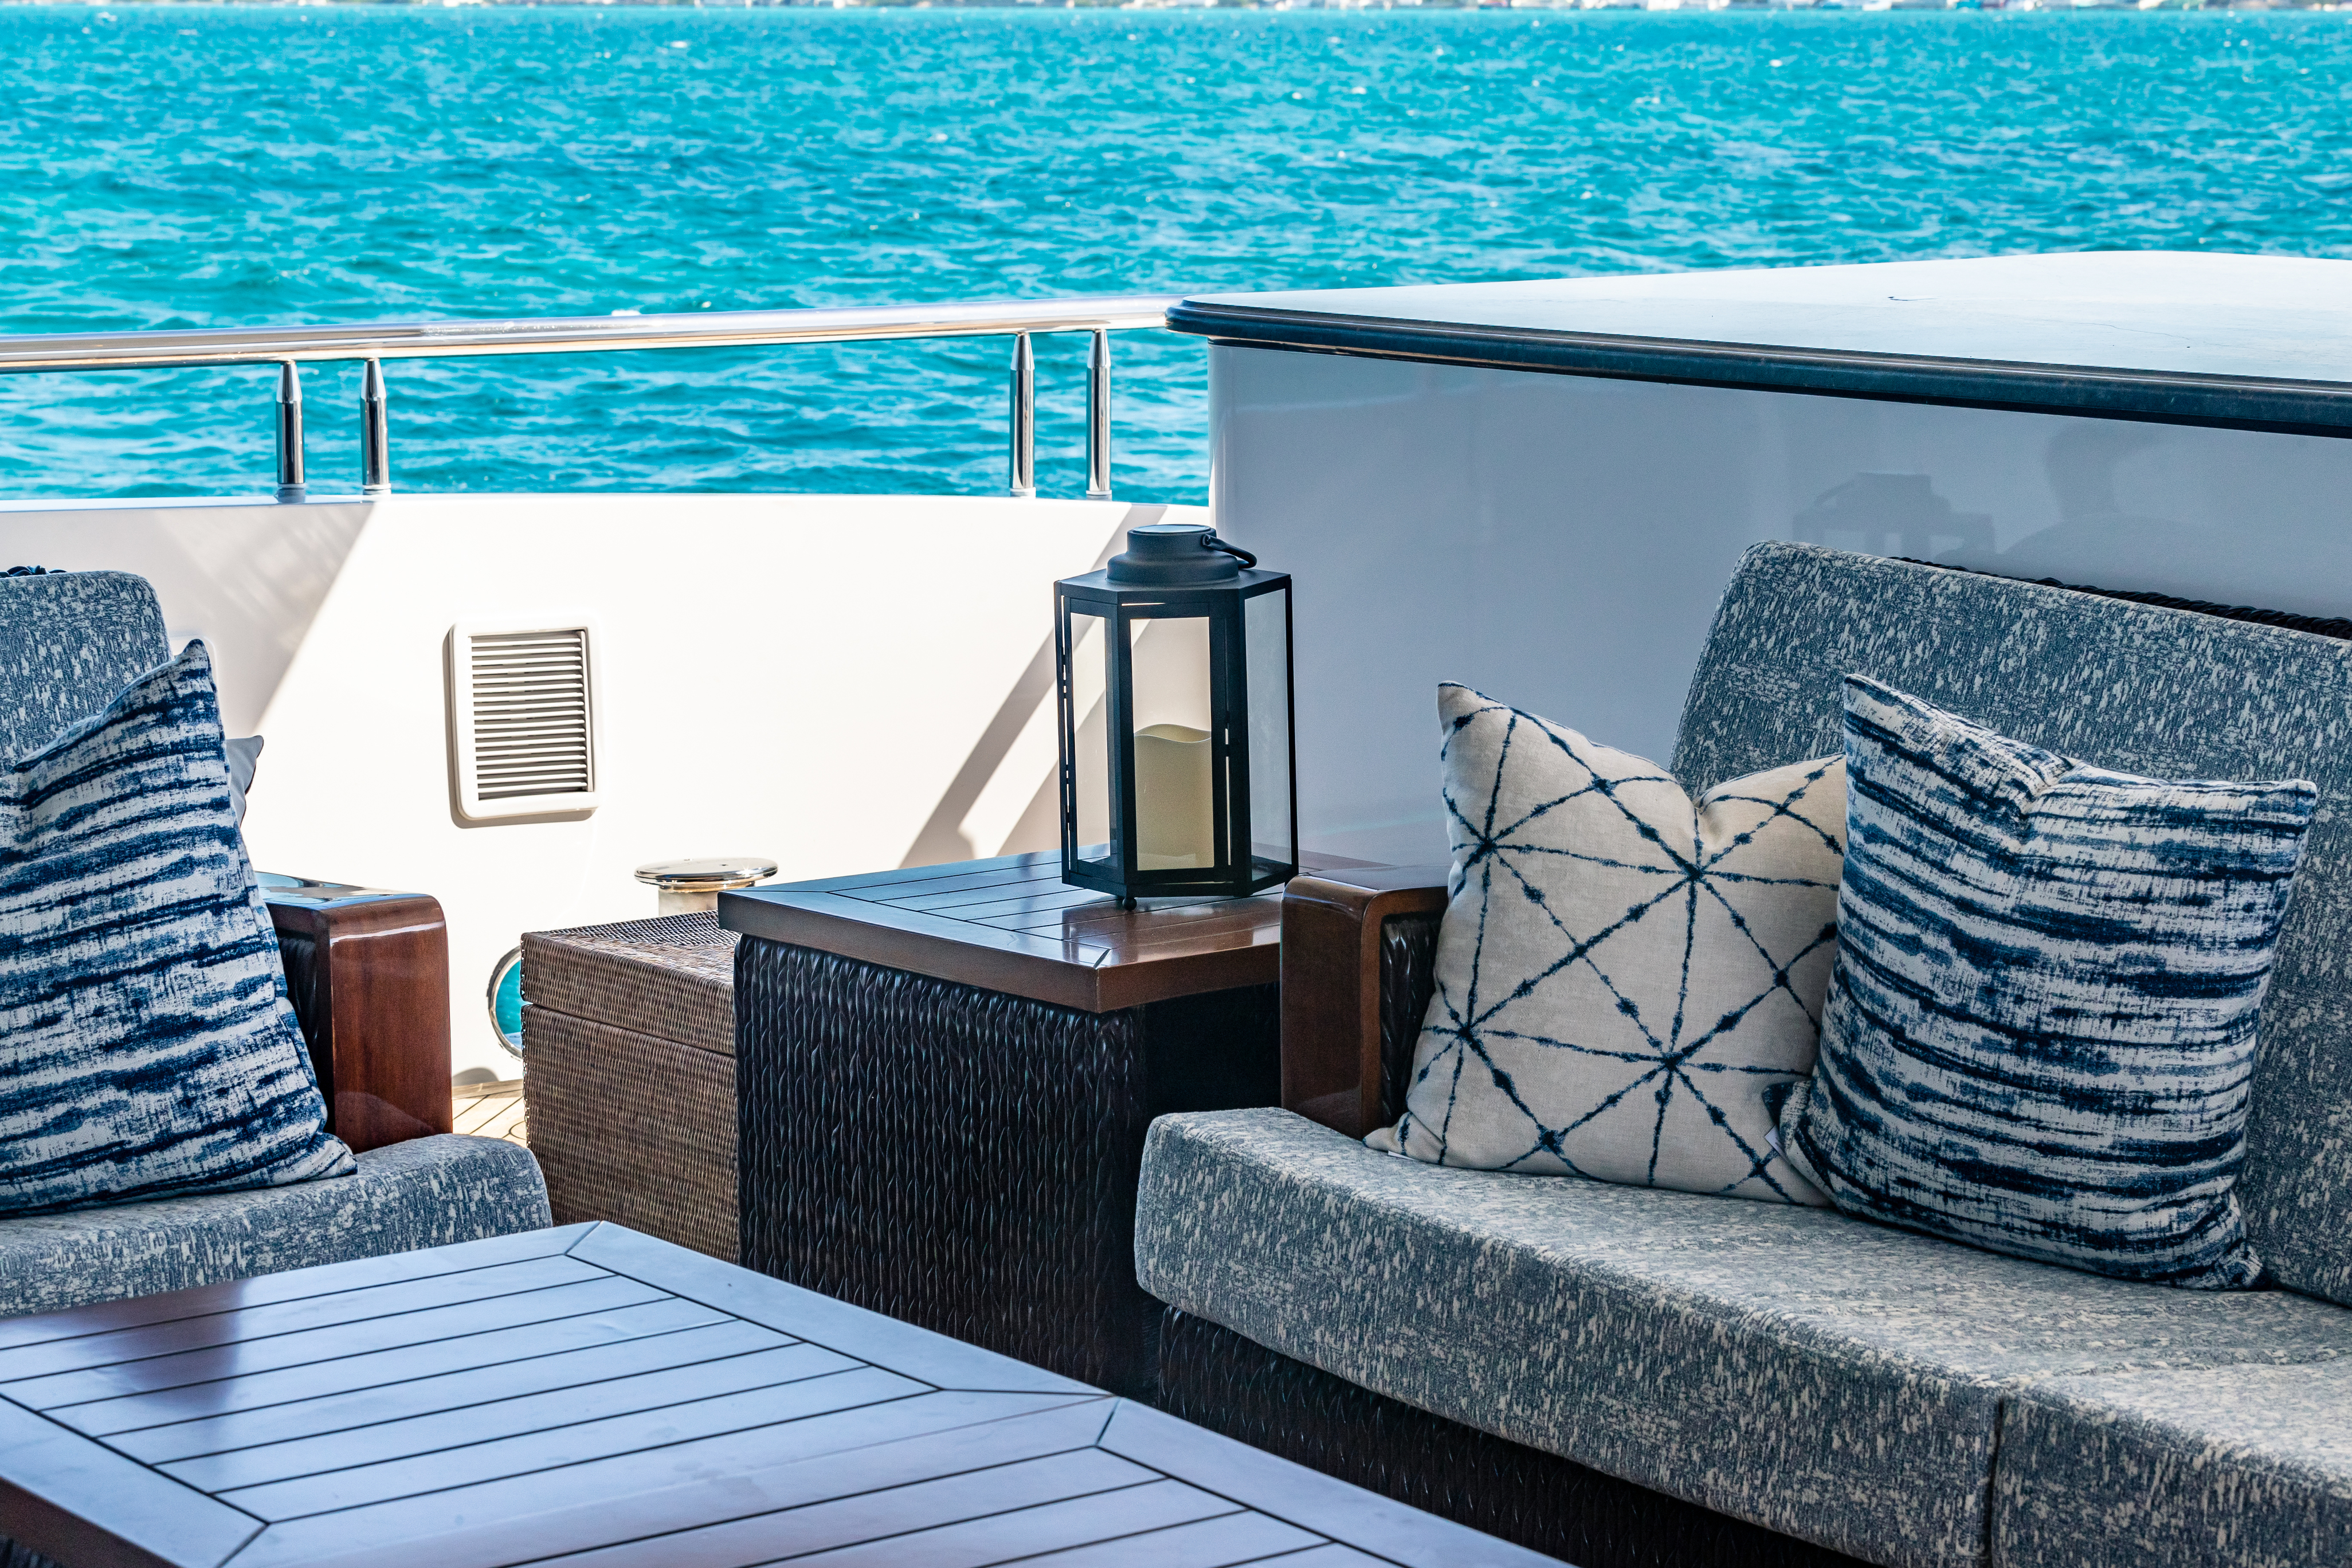 Stylish and comfortable deck furnishings